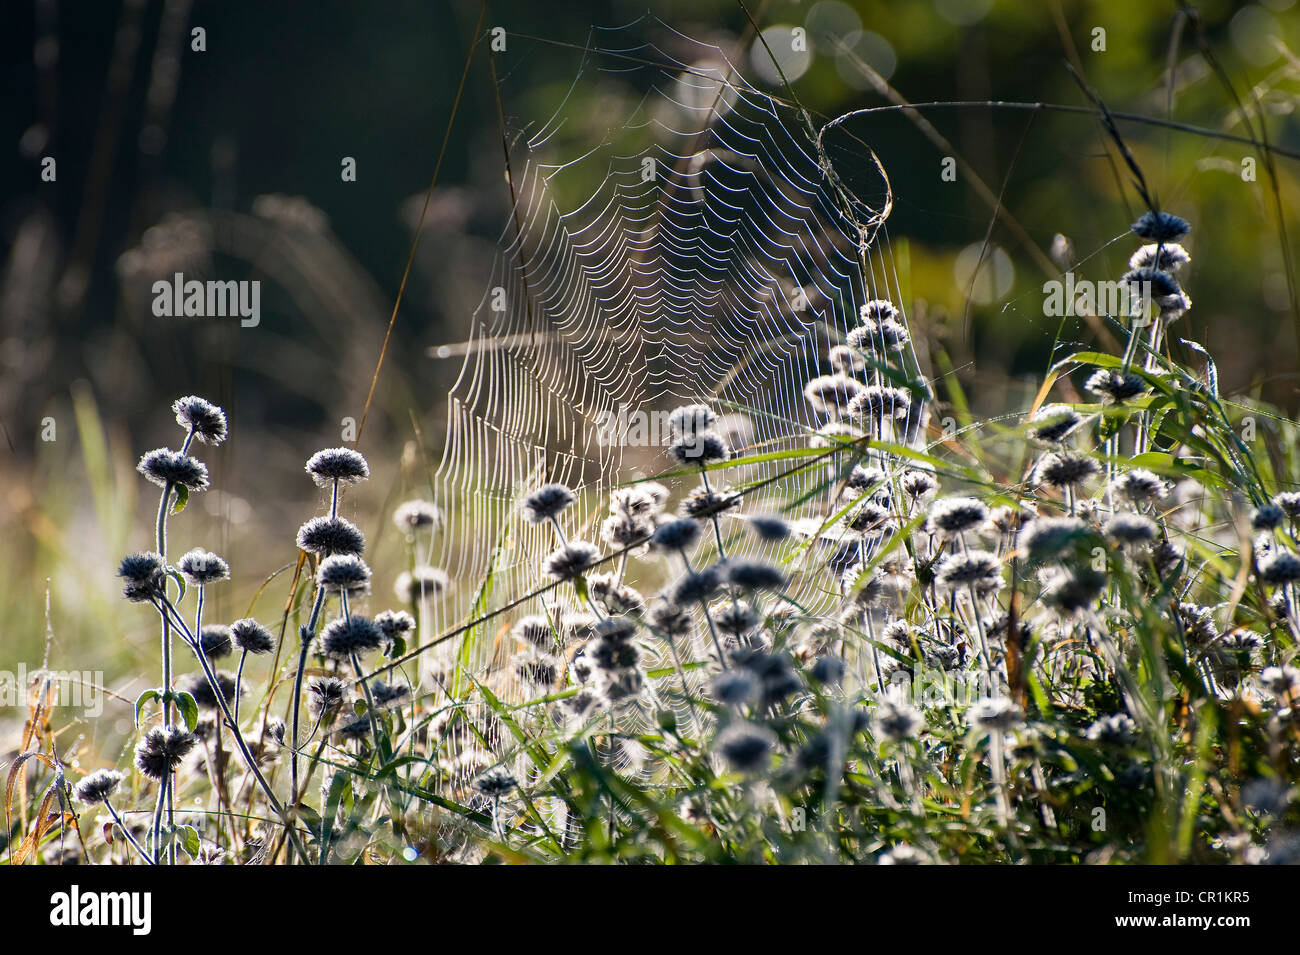 Spider web on an autumn morning Stock Photo